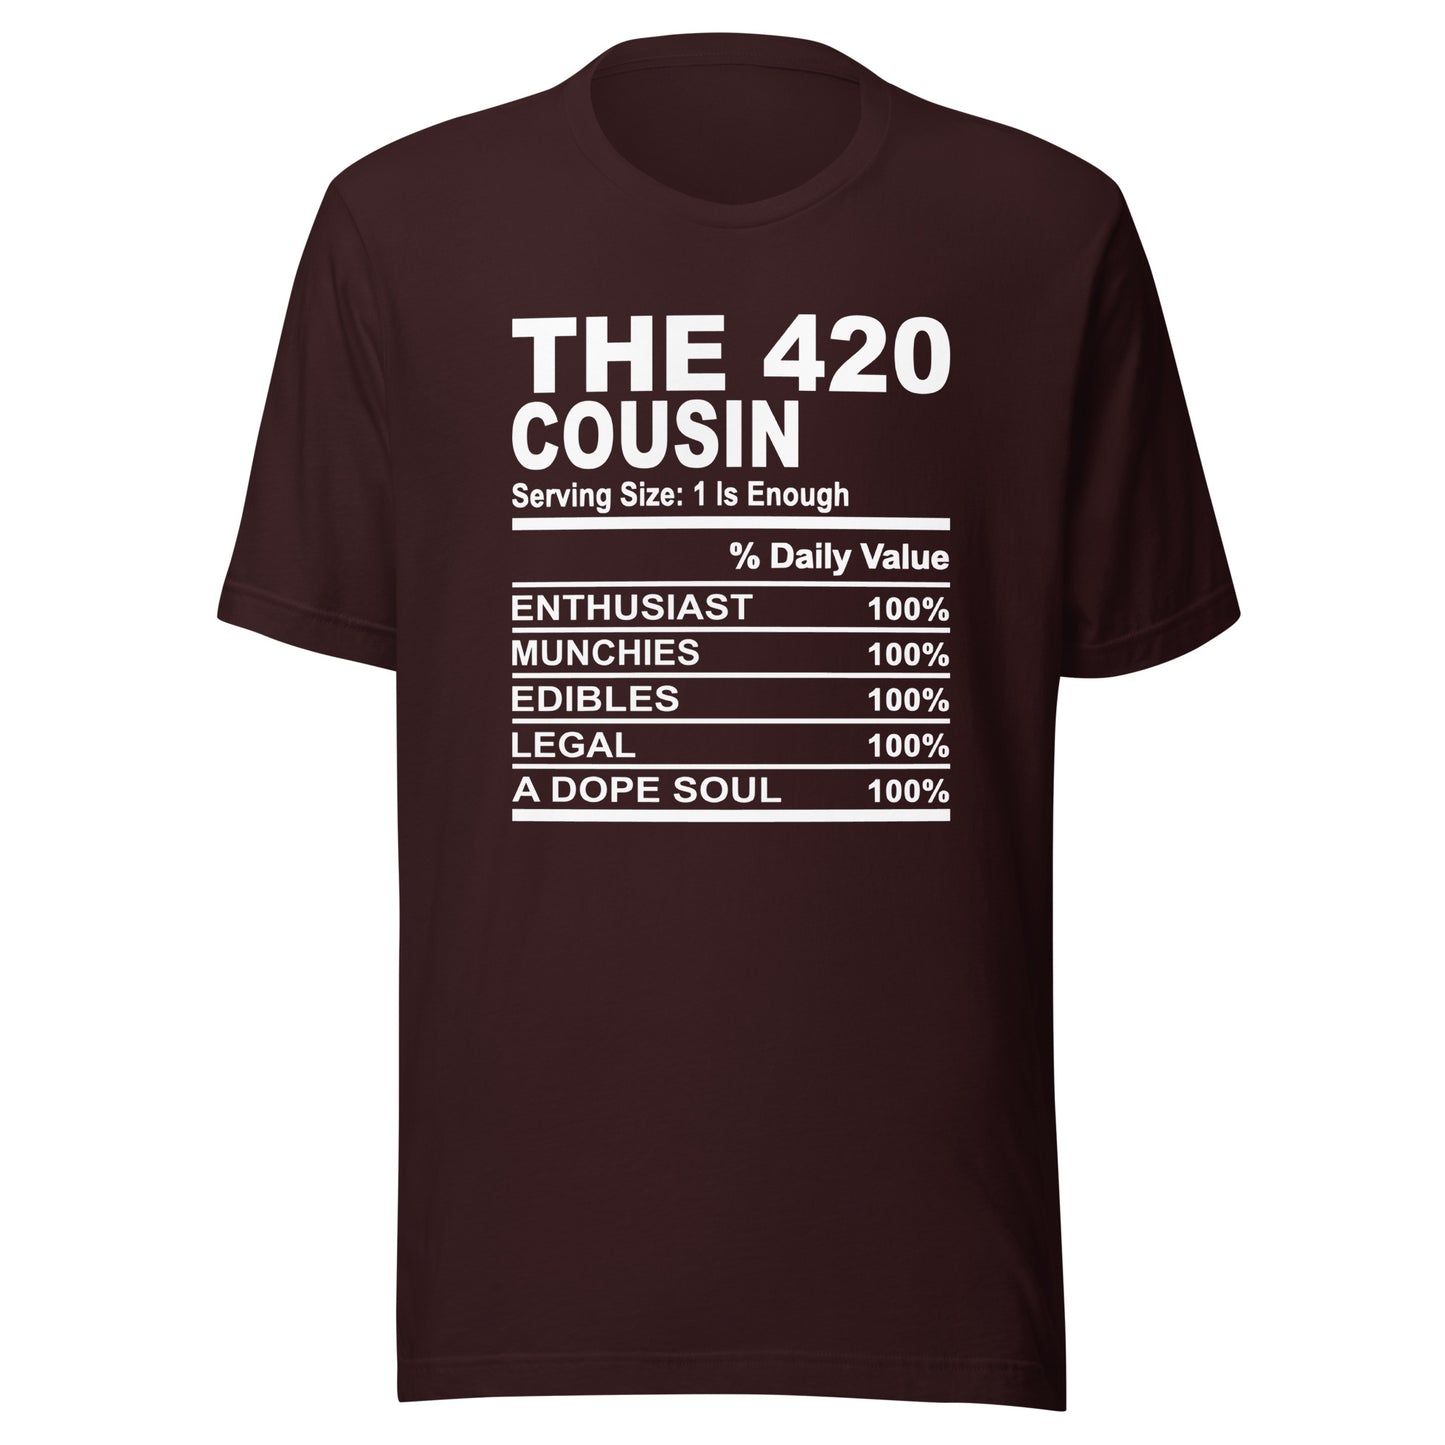 THE 420 COUSIN - 4X - Unisex T-Shirt (white print)